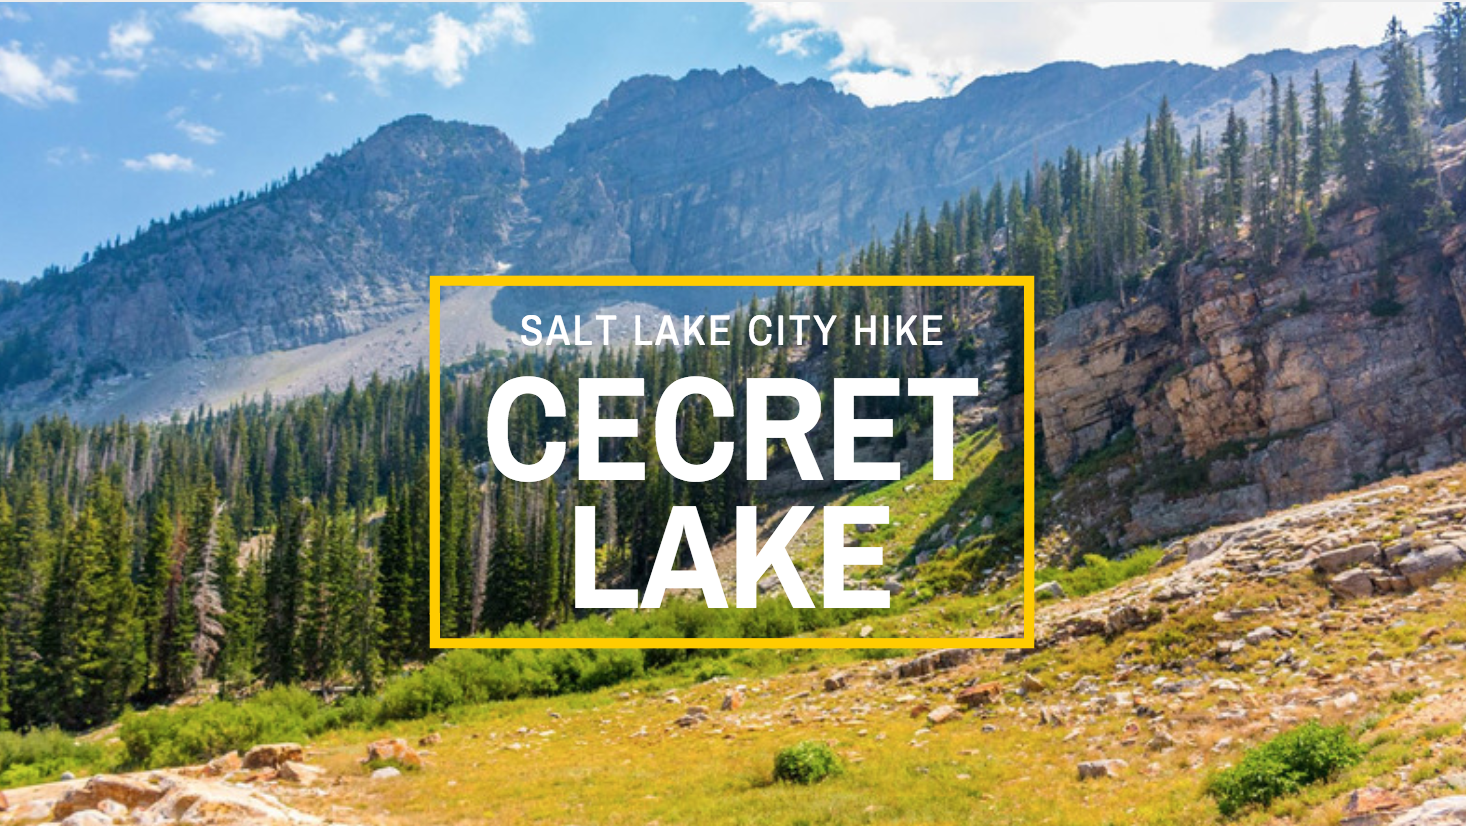 Cecret Lake (aka Secret Lake) [Salt Lake City Hike]